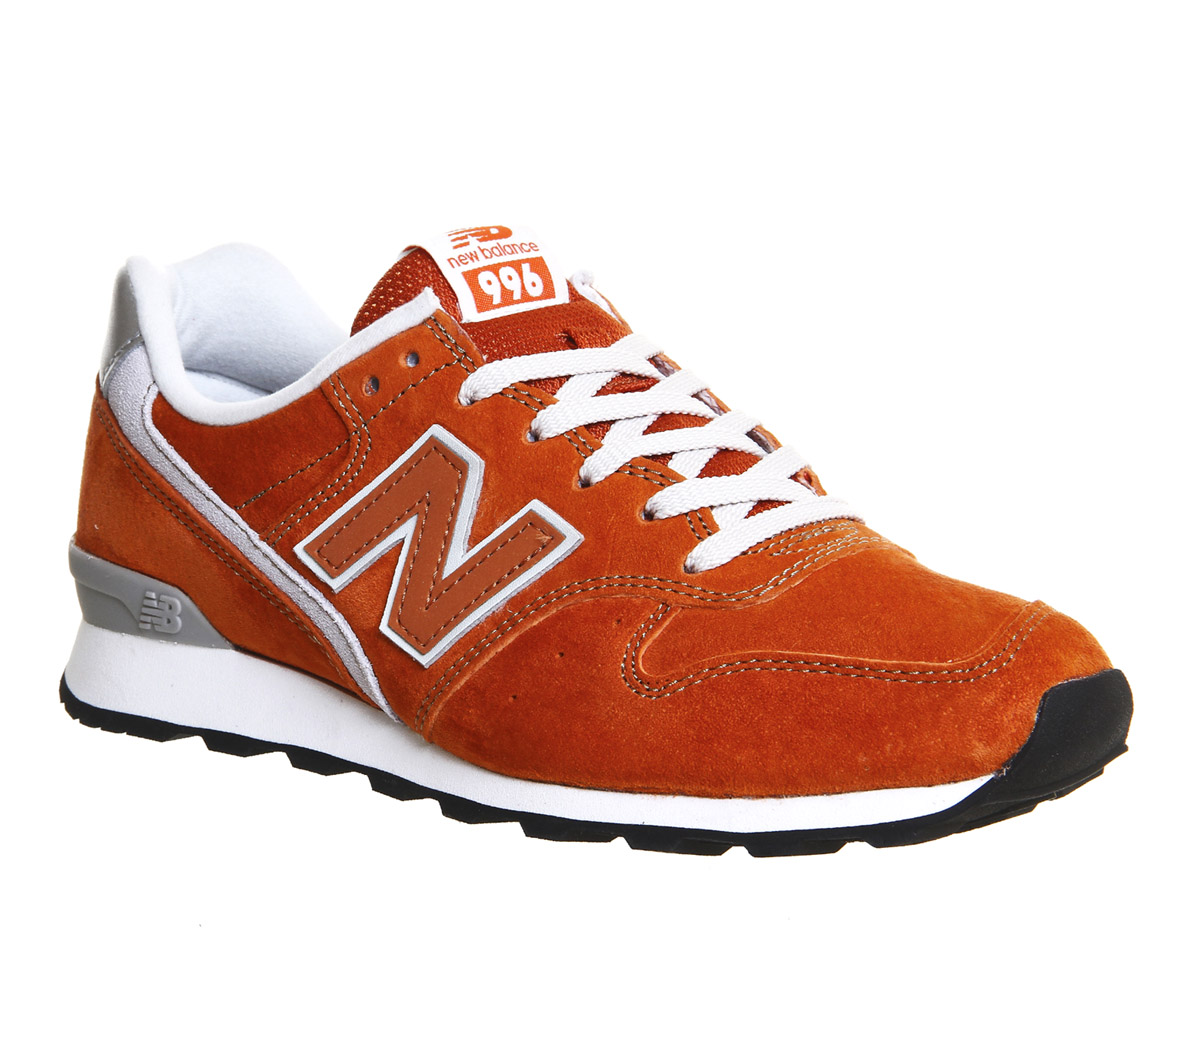 new balance 996 orange leather/mesh trainers